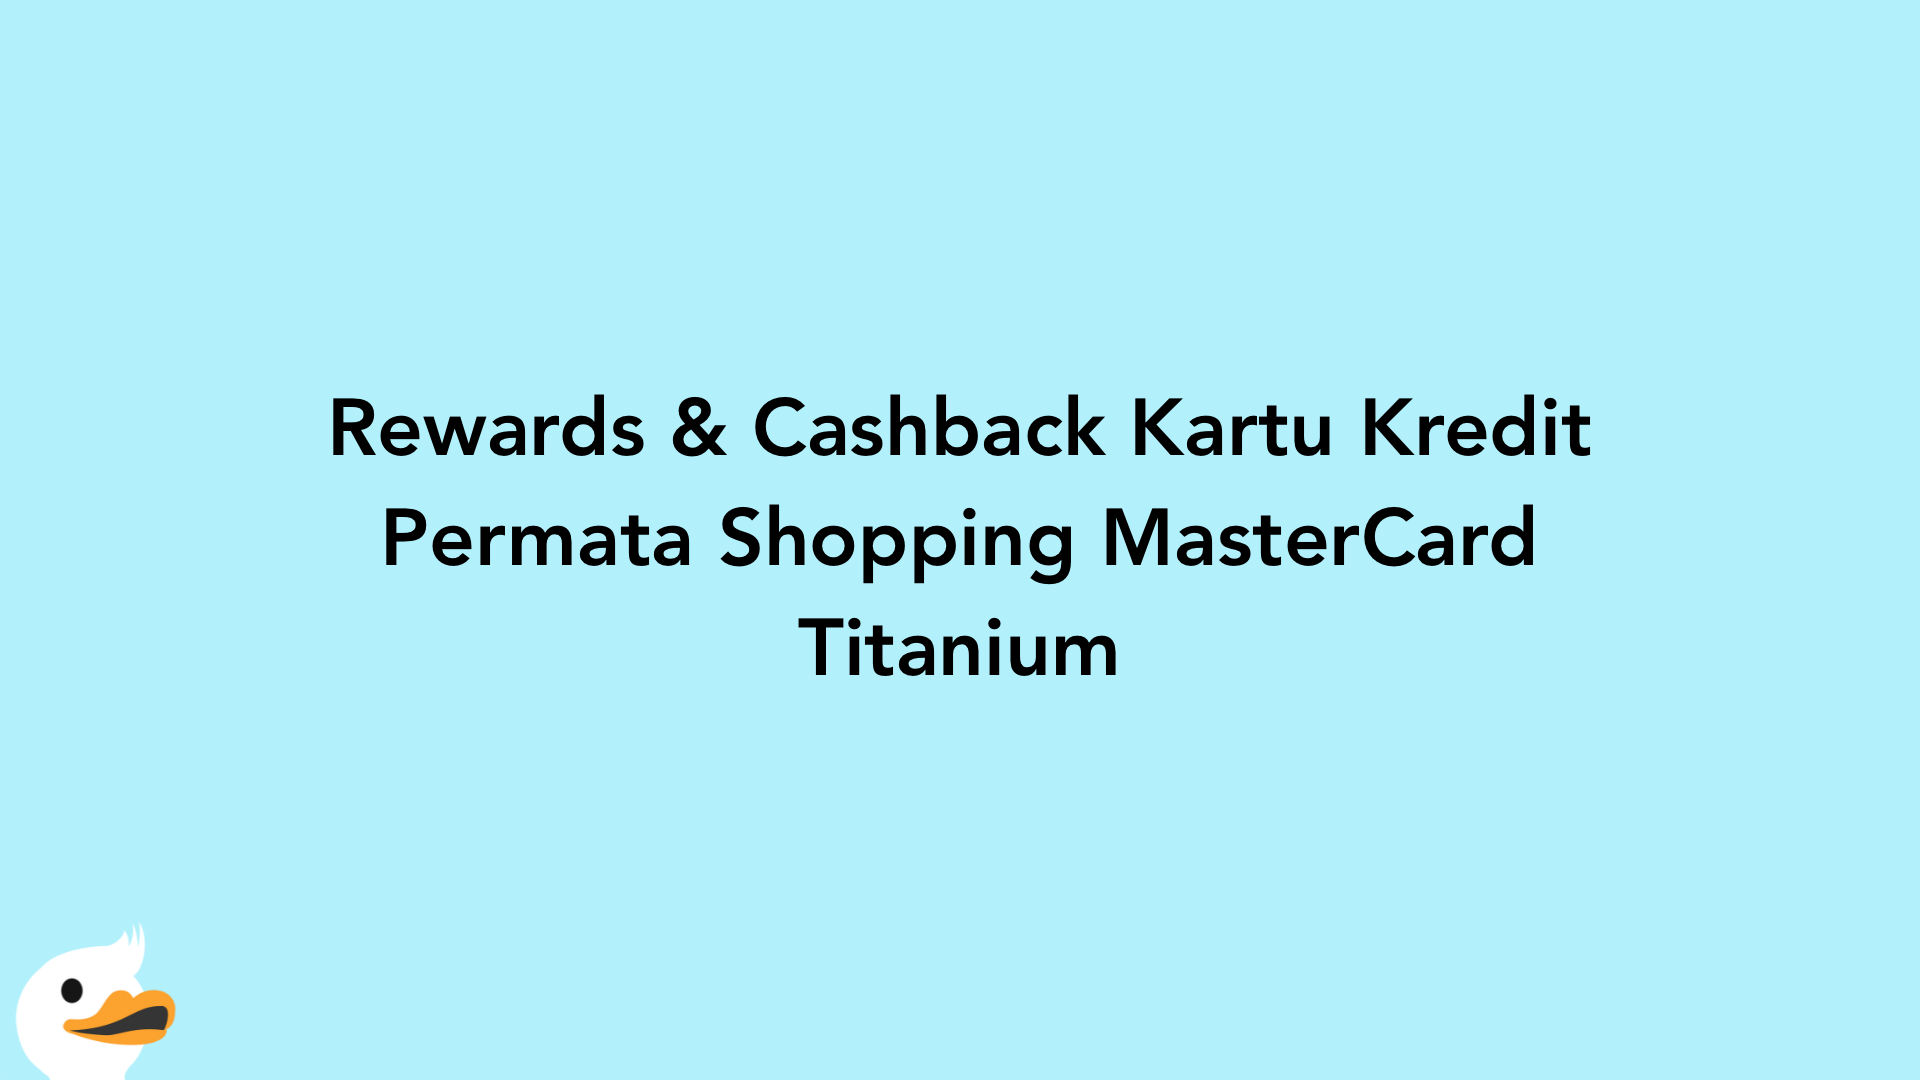 Rewards & Cashback Kartu Kredit Permata Shopping MasterCard Titanium